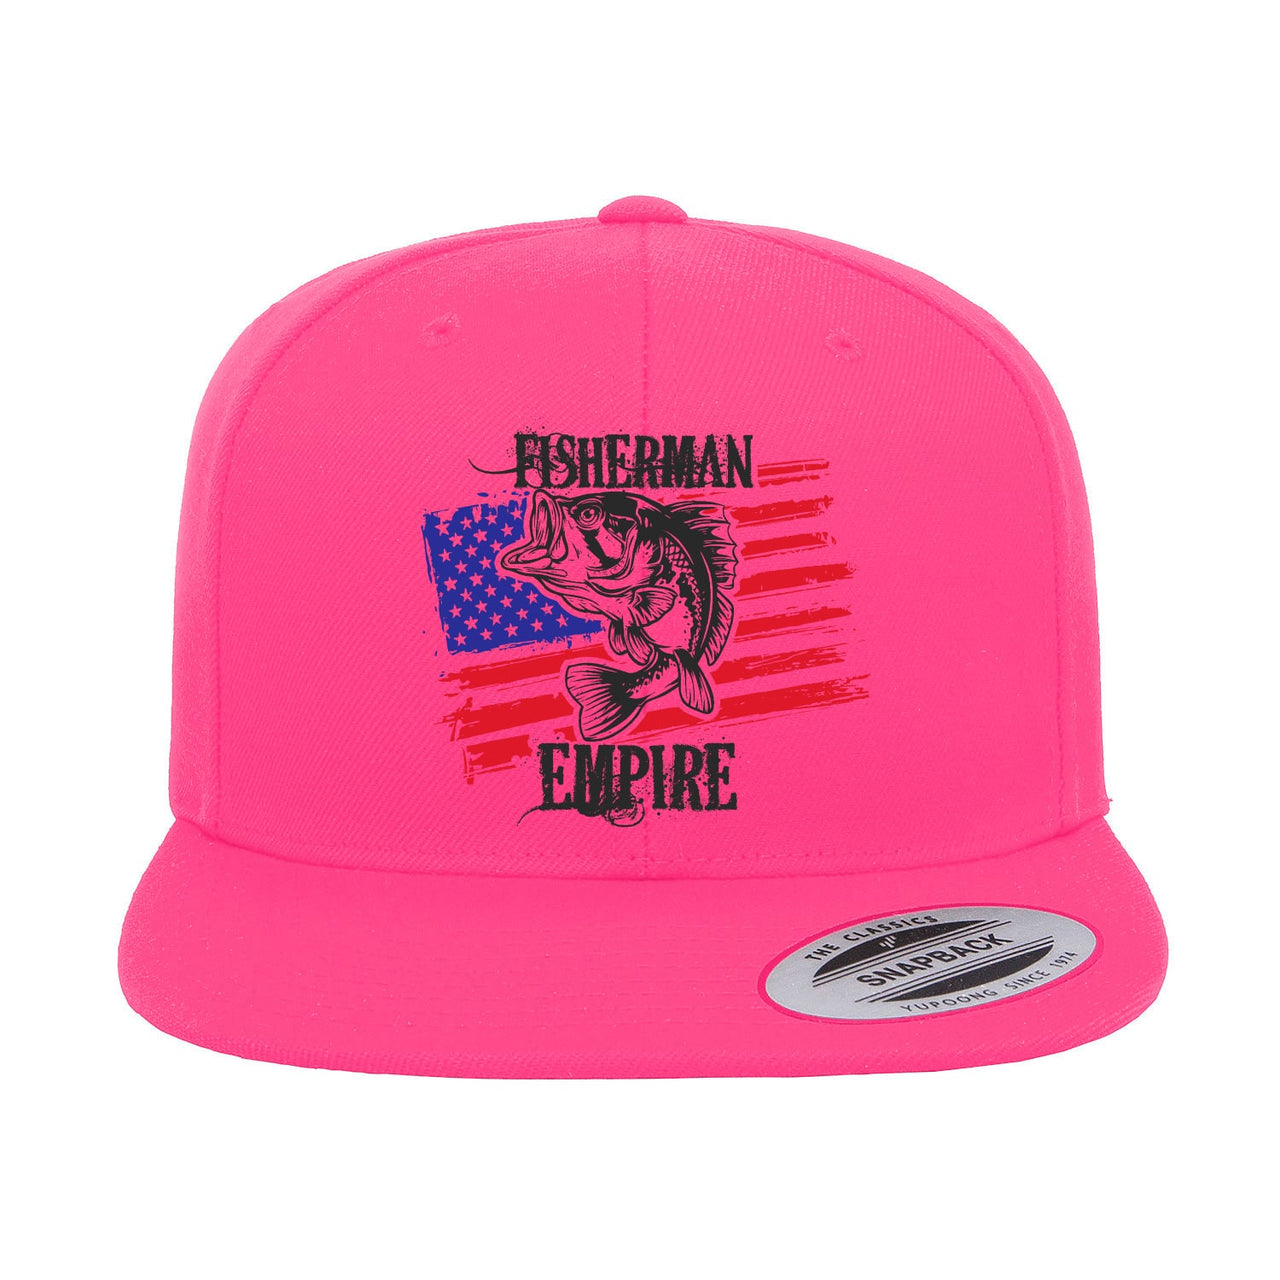 Fisherman American Empire Color Embroidered Flat Bill Cap